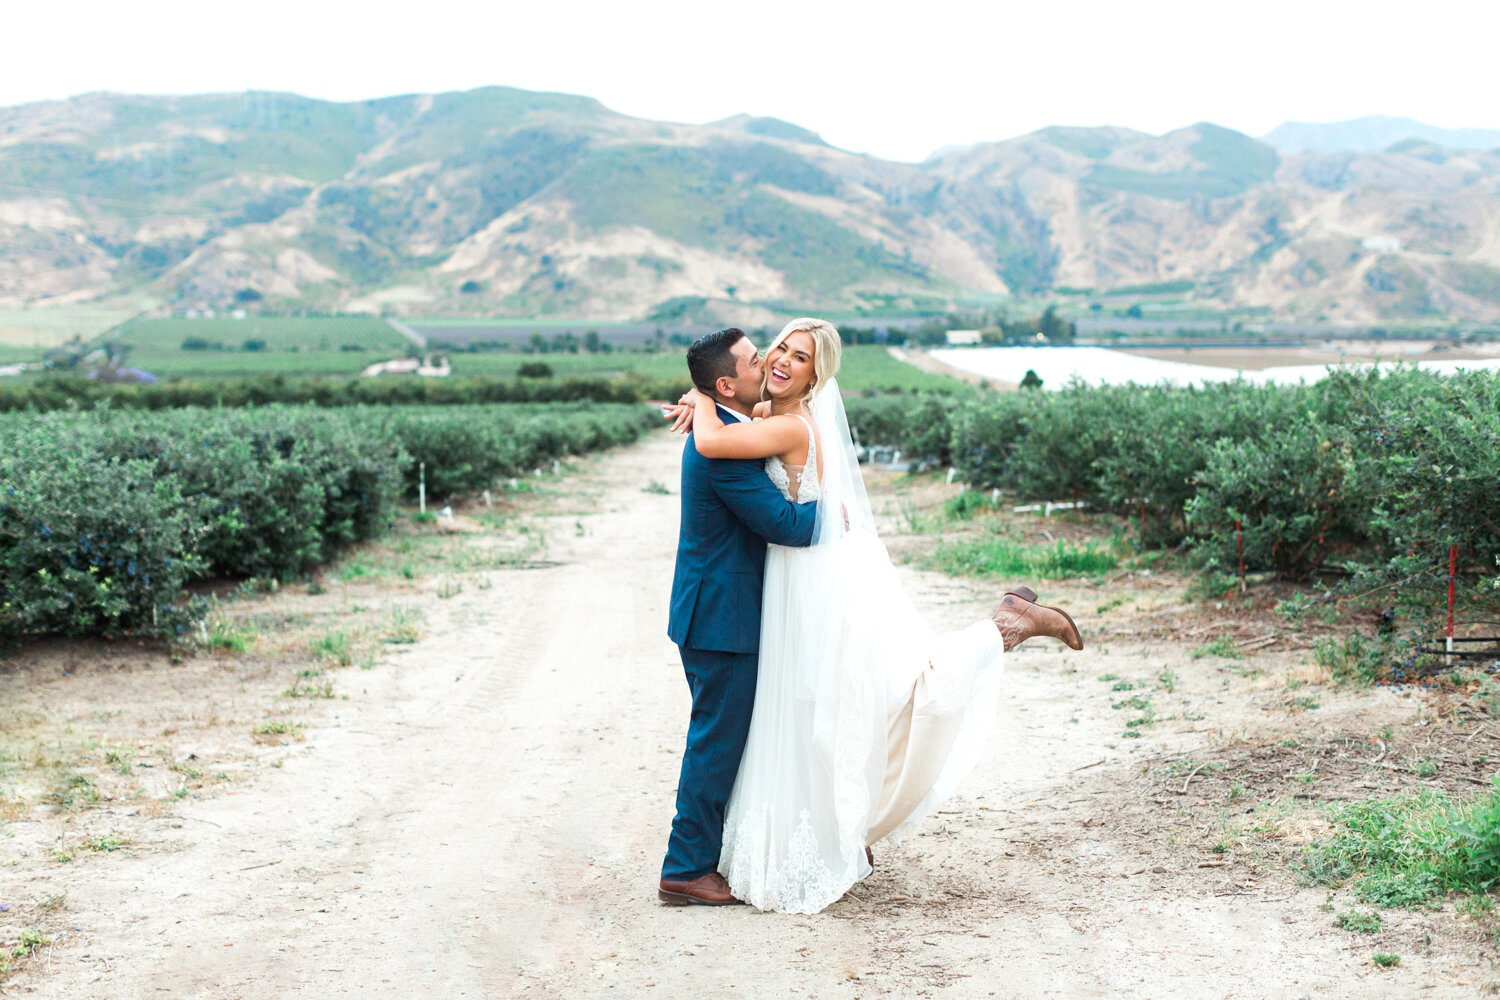 wisteria-photography.com | Wisteria Photography | Gerry Ranch | Weddings Engagement | Southern California Photographer-47.jpg